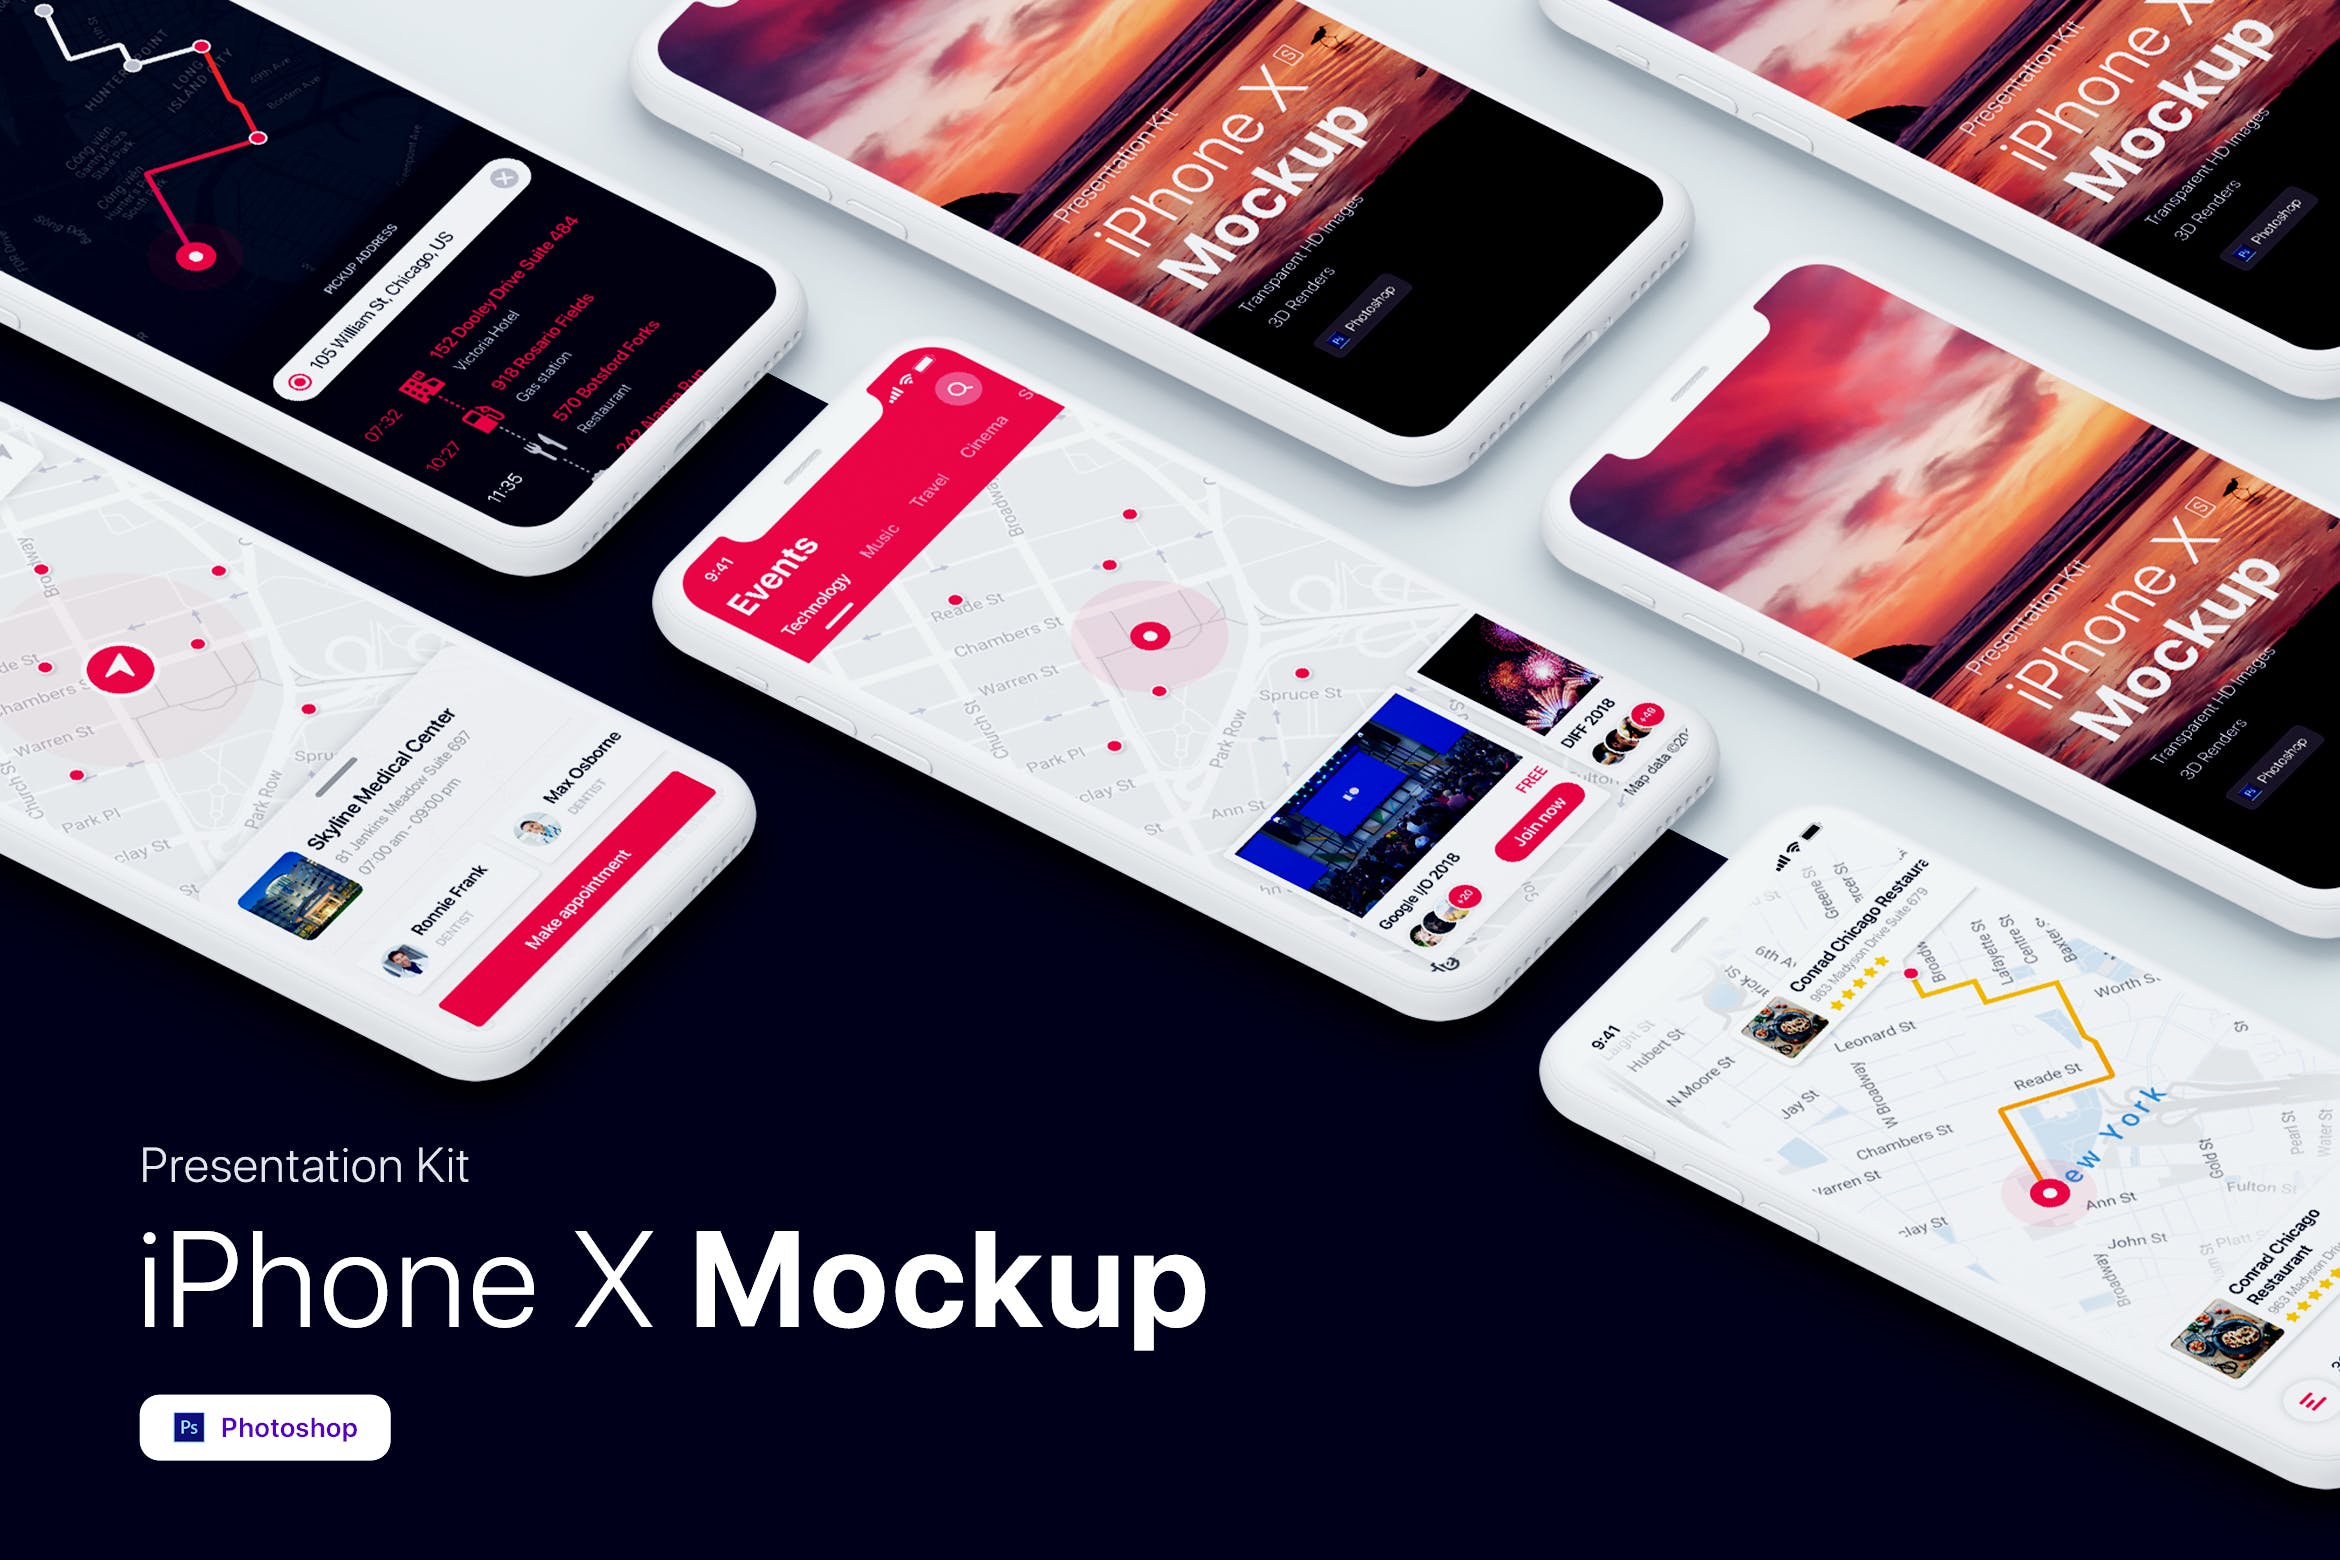 App界面设计截图预览iphone X手机样机模板素材v1 Presentation Kit Iphone Showcase Mockup 第一 素材网